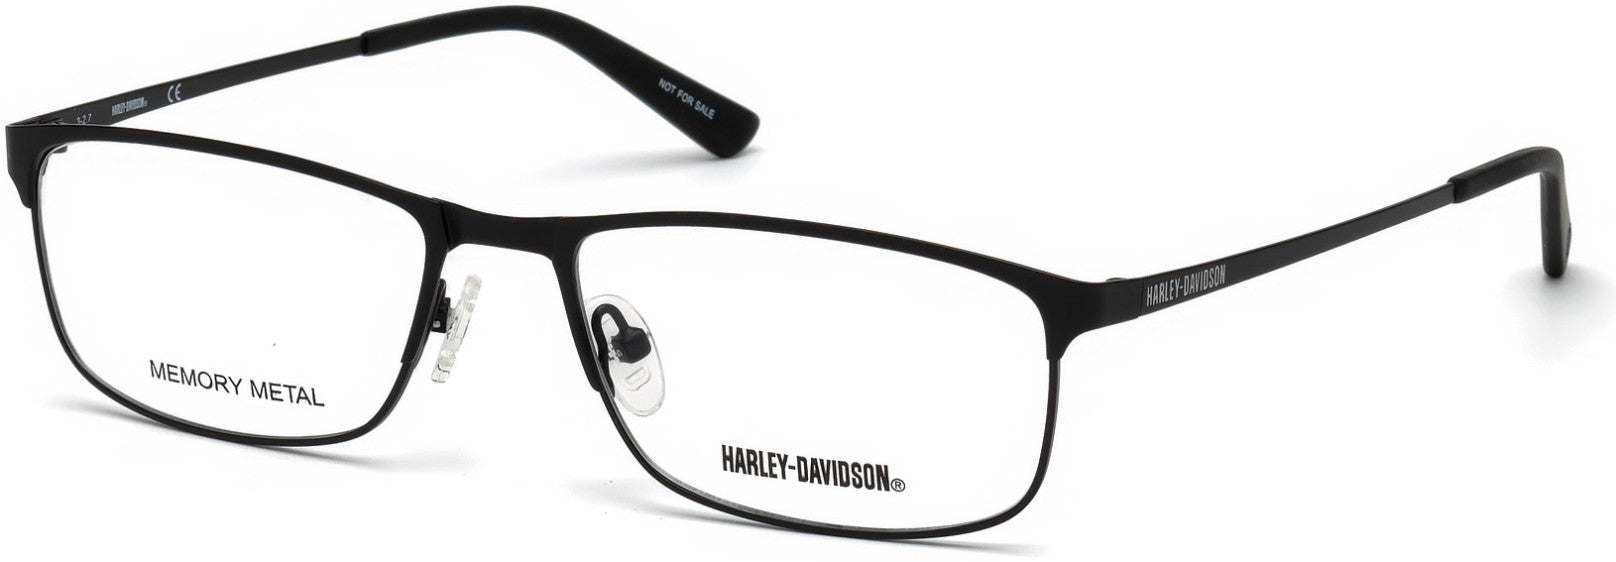 Harley-Davidson HD0772 Geometric Eyeglasses 002-002 - Matte Black